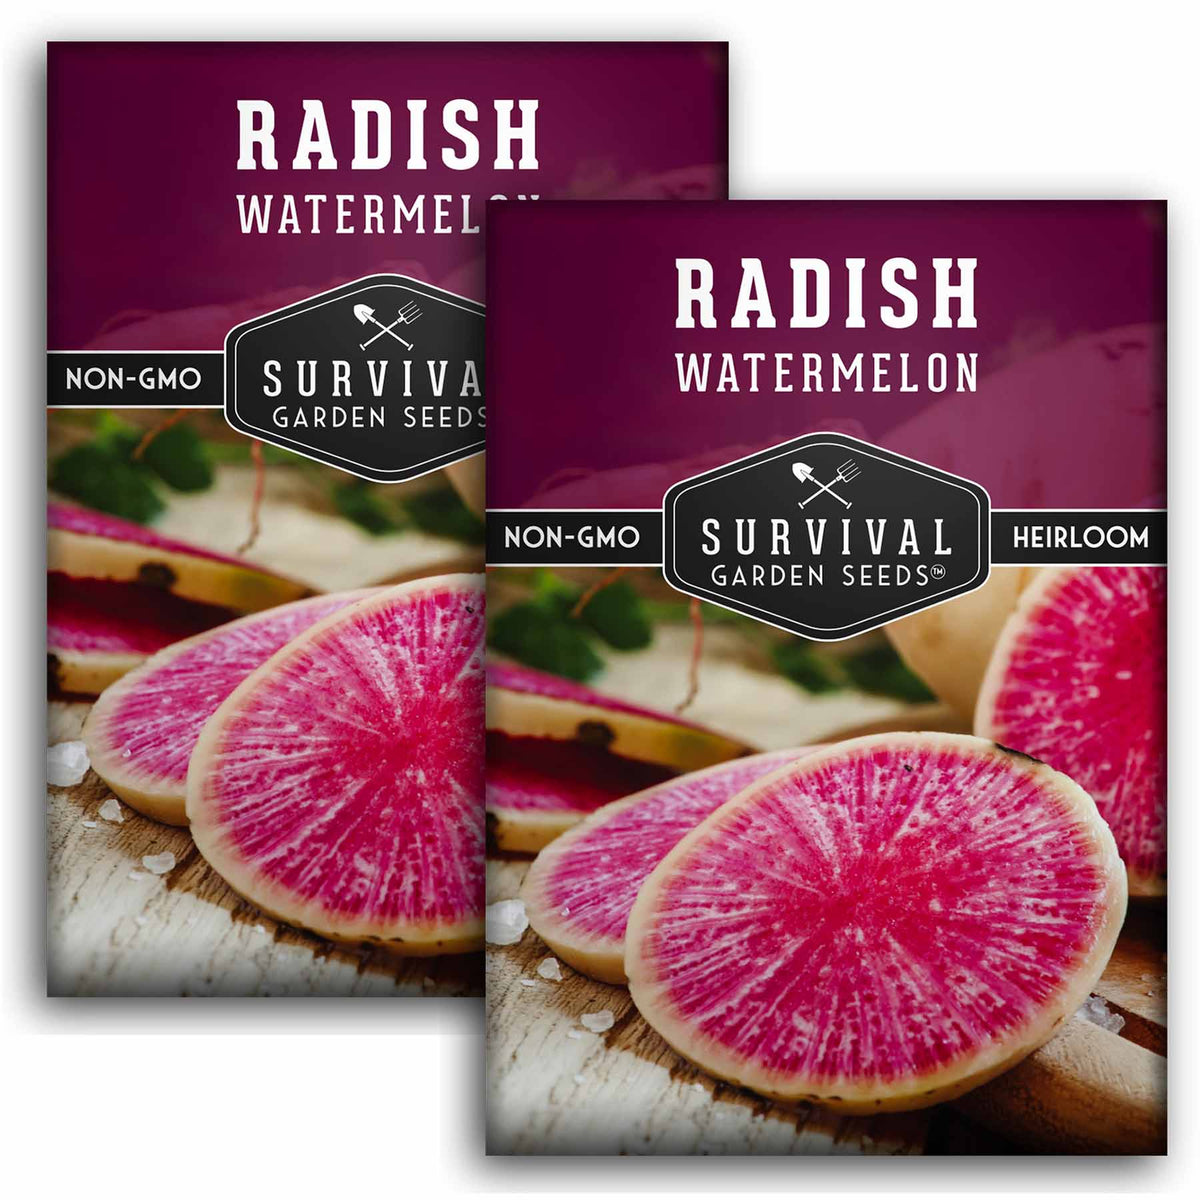 2 packets of Watermelon Radish seeds